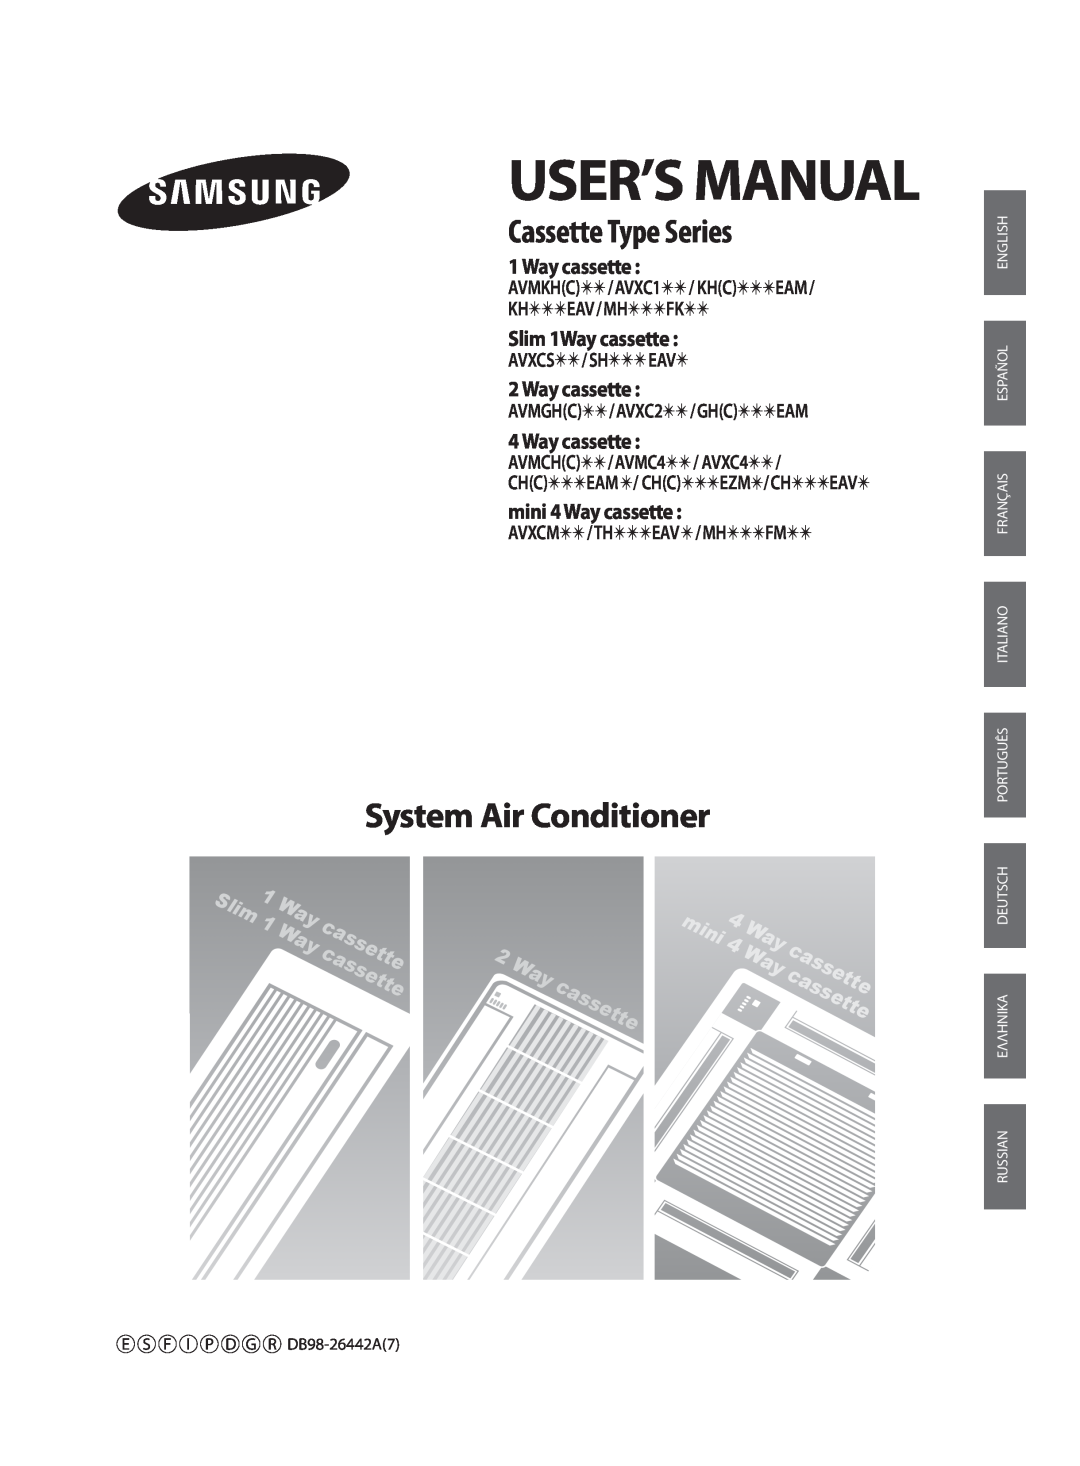 Samsung AVMCH(C)** user manual Cassette Type Series, Slim 1Way cassette, mini 4 Way cassette, Russianeλλhnika Deutsch 